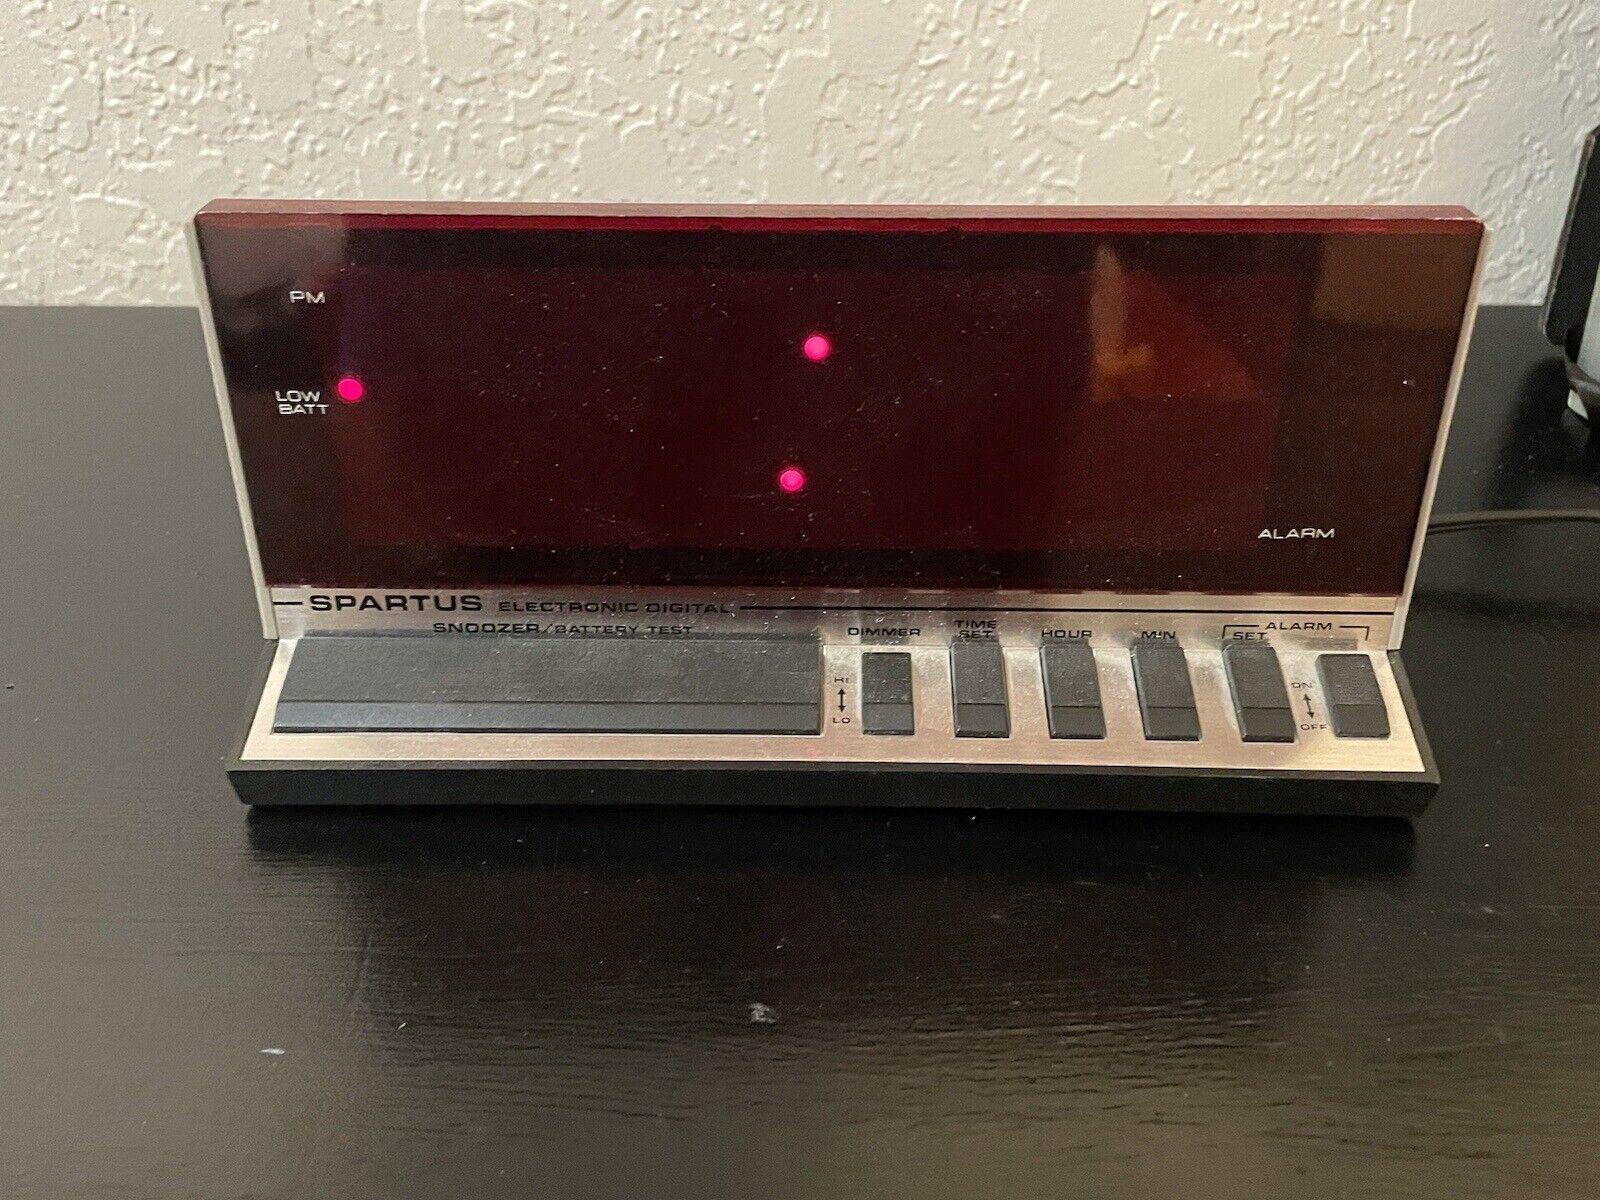 Vintage Spartus Electronic Digital Alarm Clock 1150 Large Display Retro *Tested*